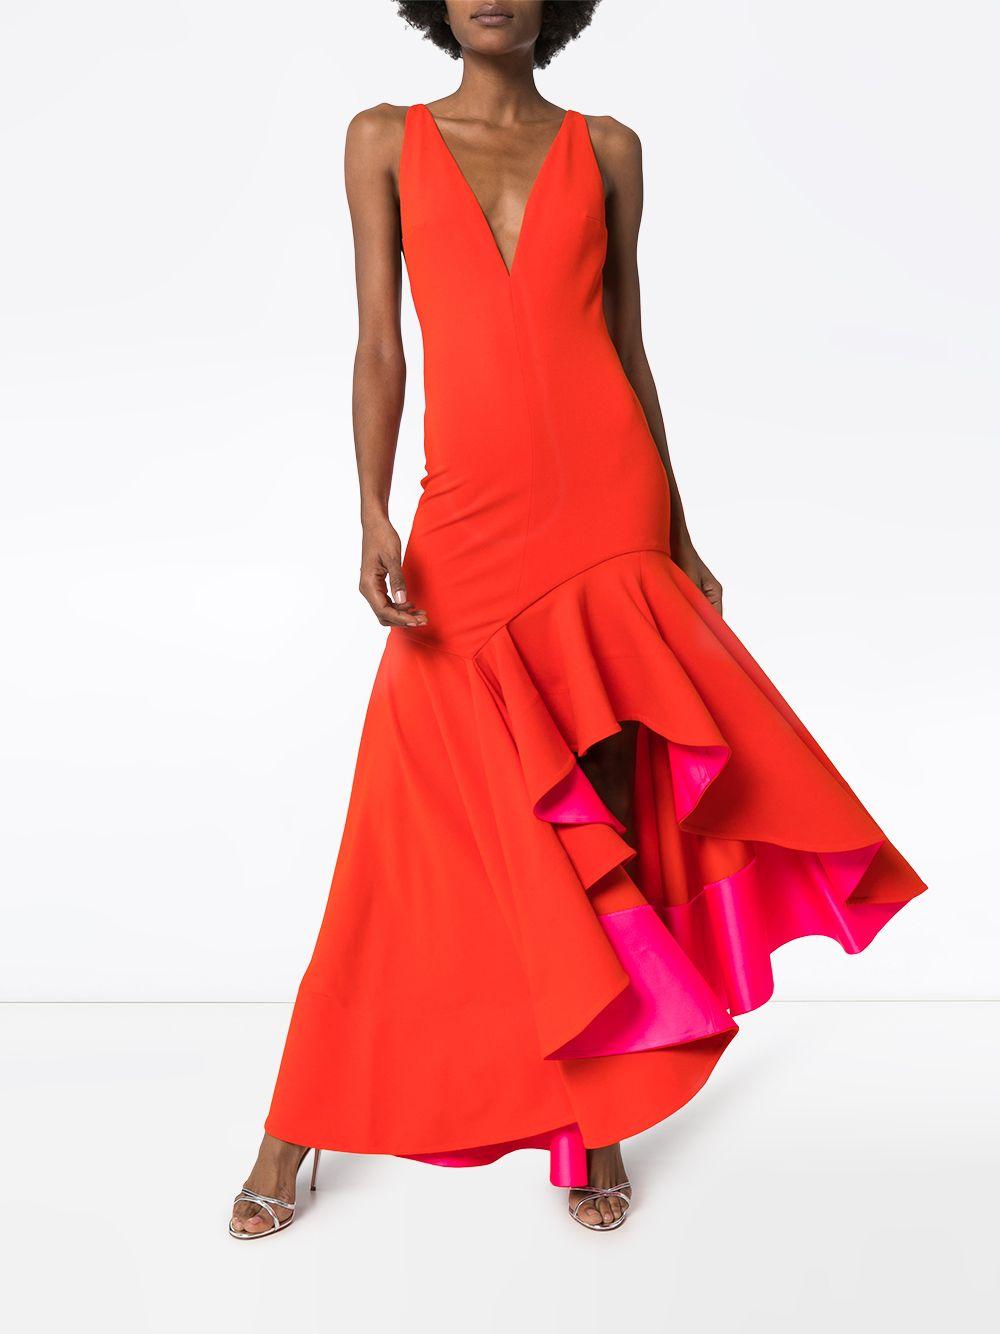 Solace London Synthetic Edana V-neck Dress in Orange - Lyst